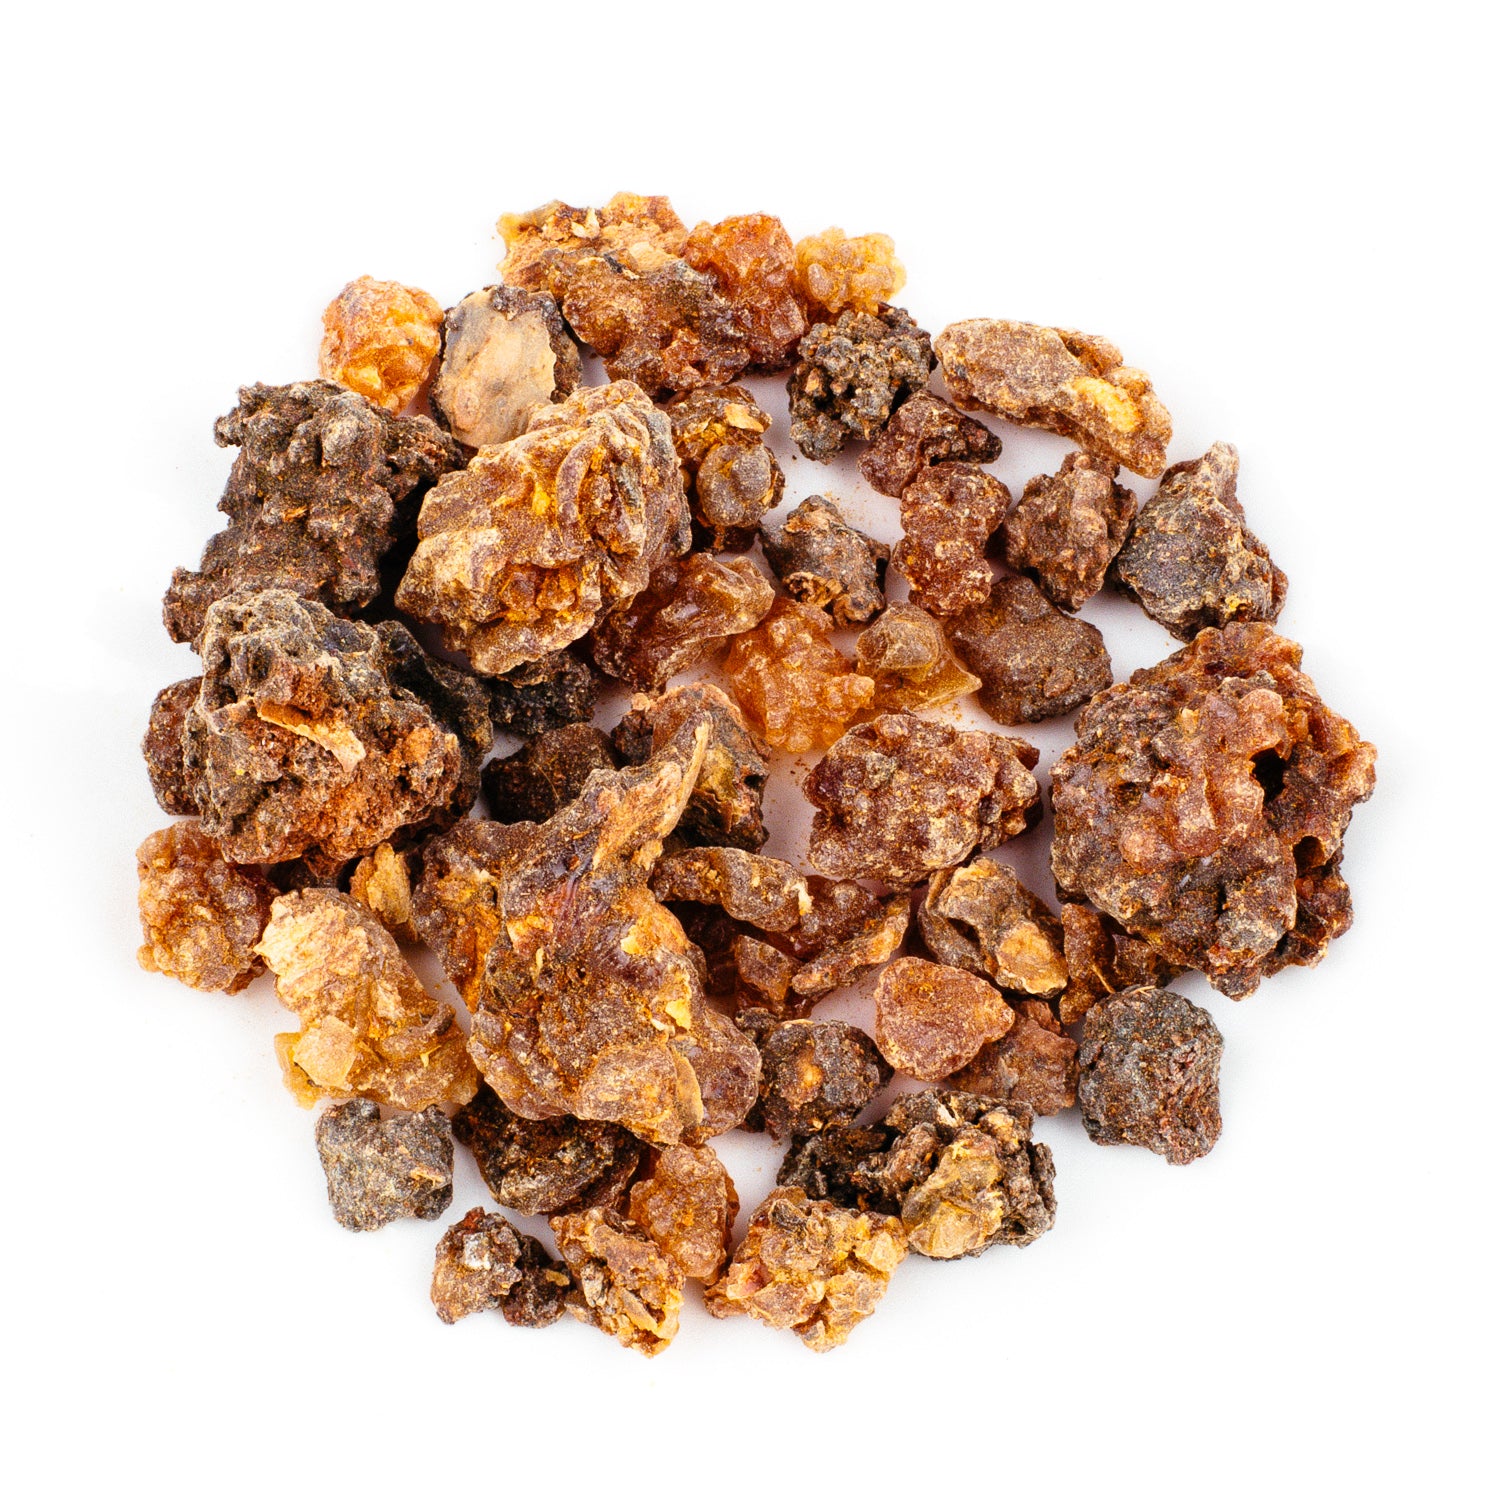 Myrrh Resin Incense, First Grade; Powder or Chunk - Glorian